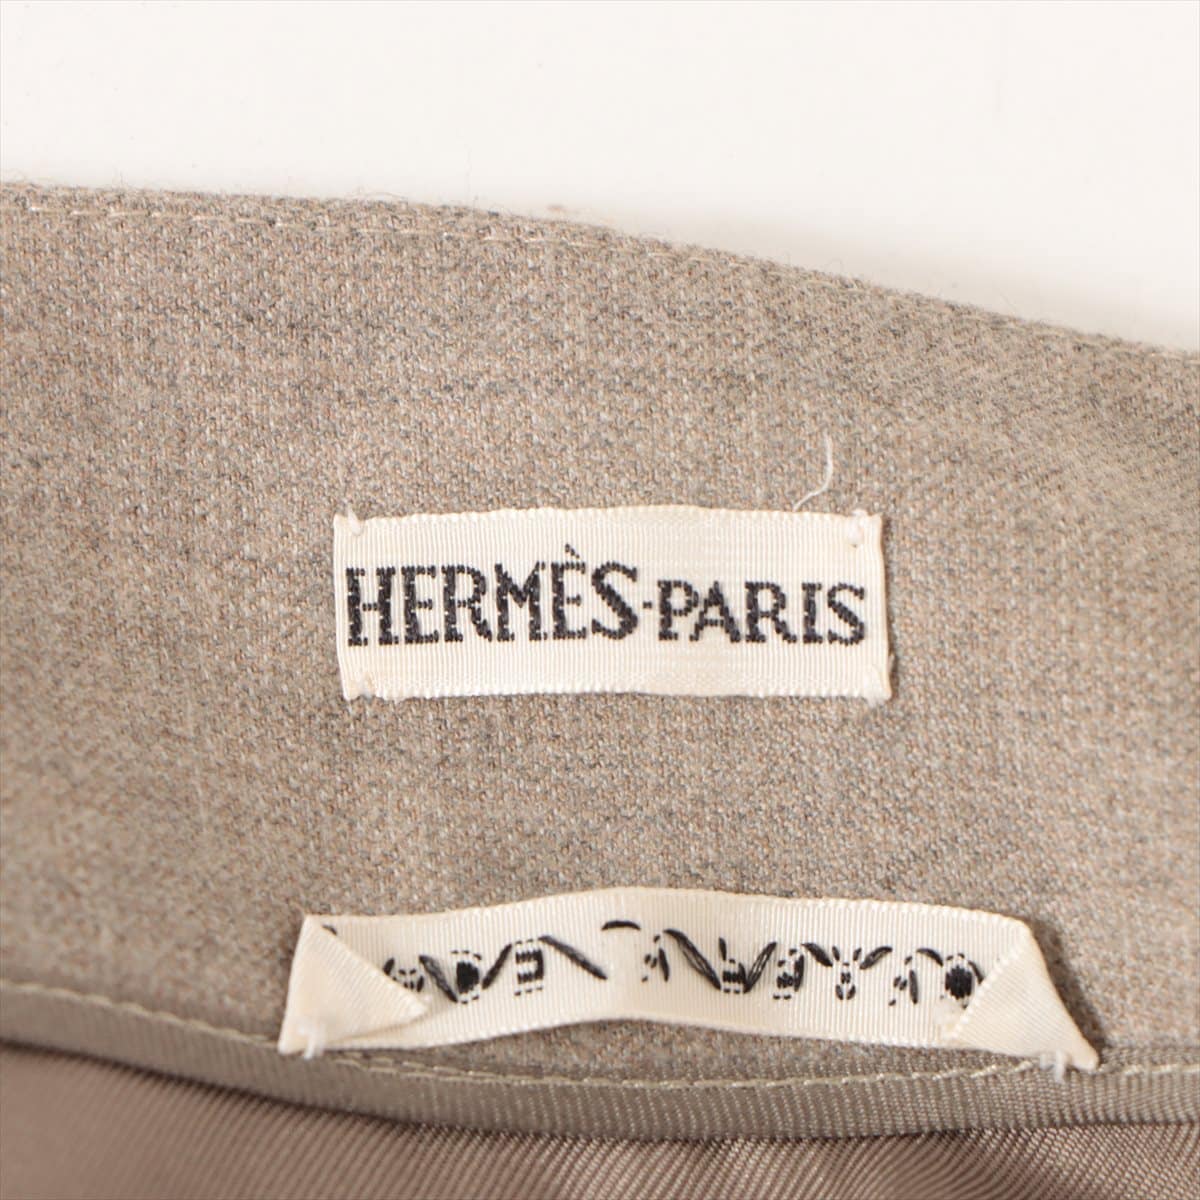 Hermès Margiela Cashmere Skirt 40 Ladies' Beige